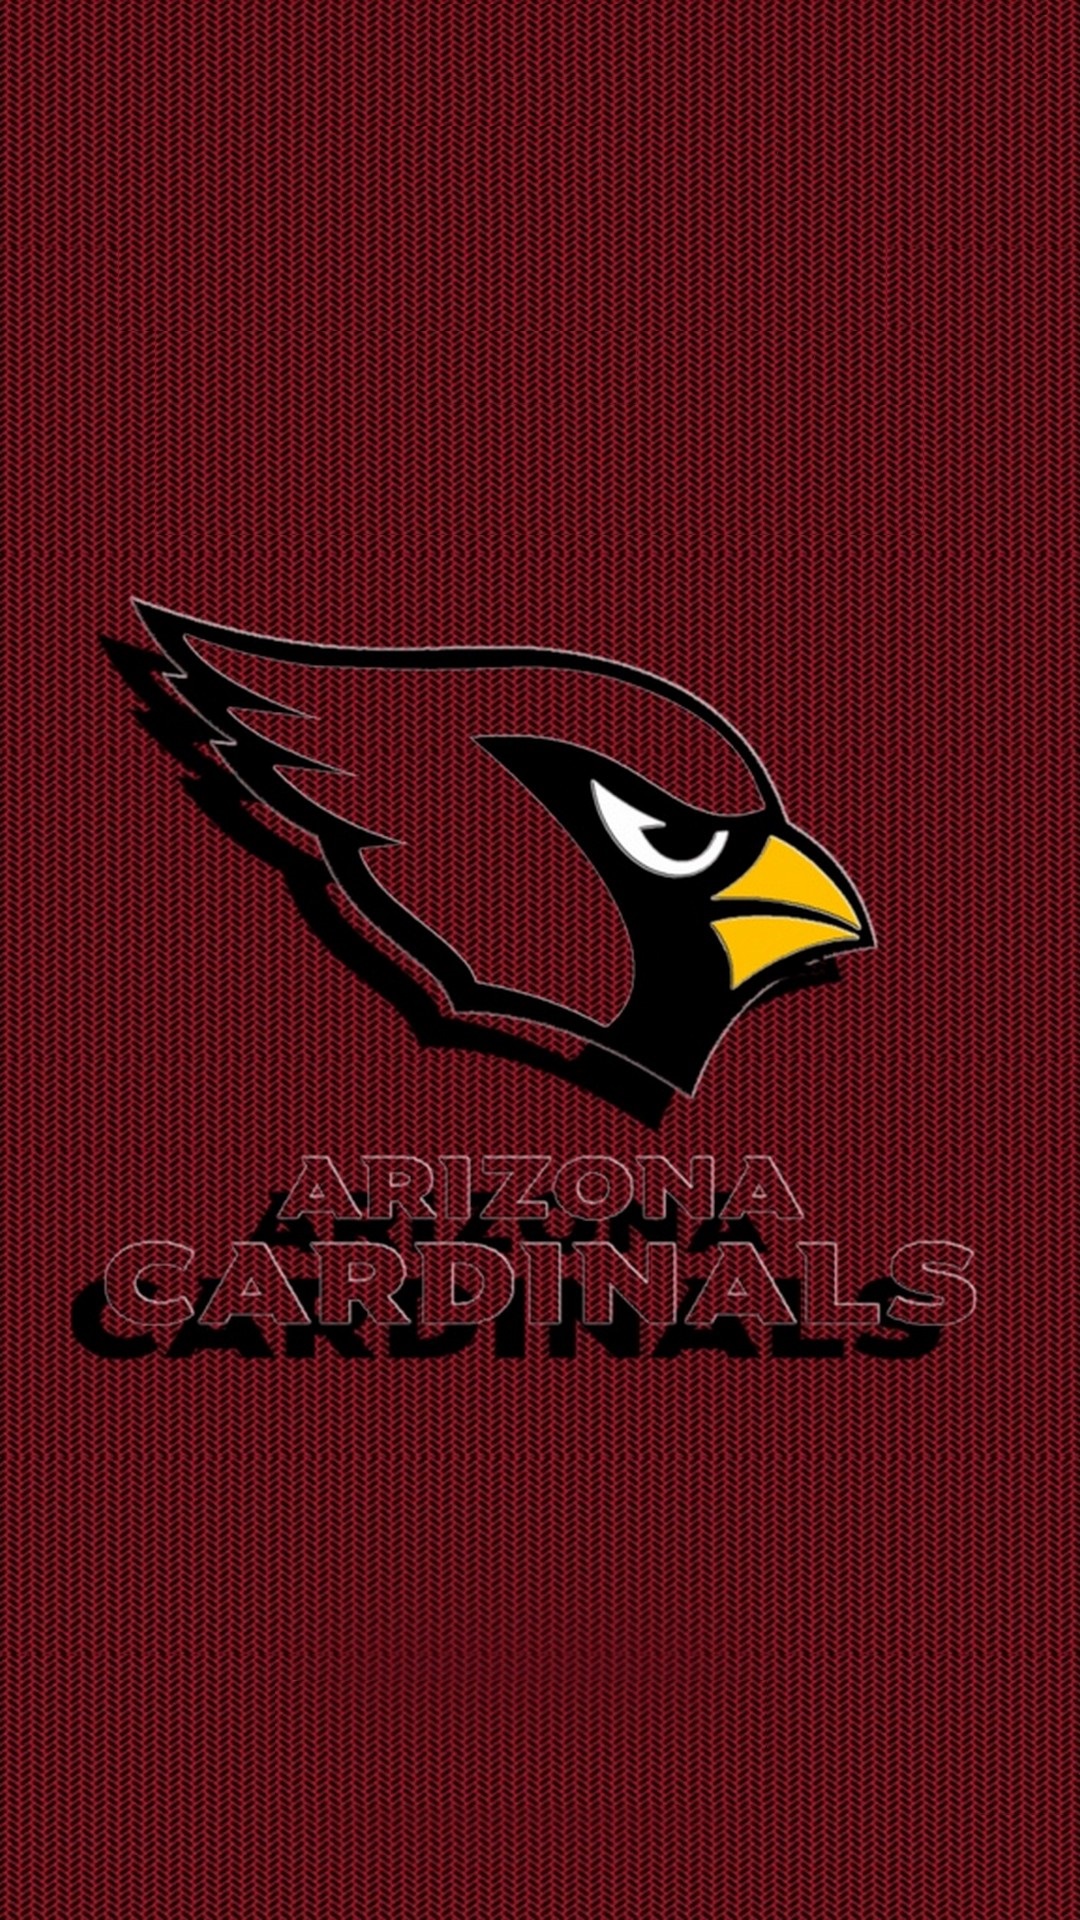 Arizona Cardinals Wallpaper - NawPic